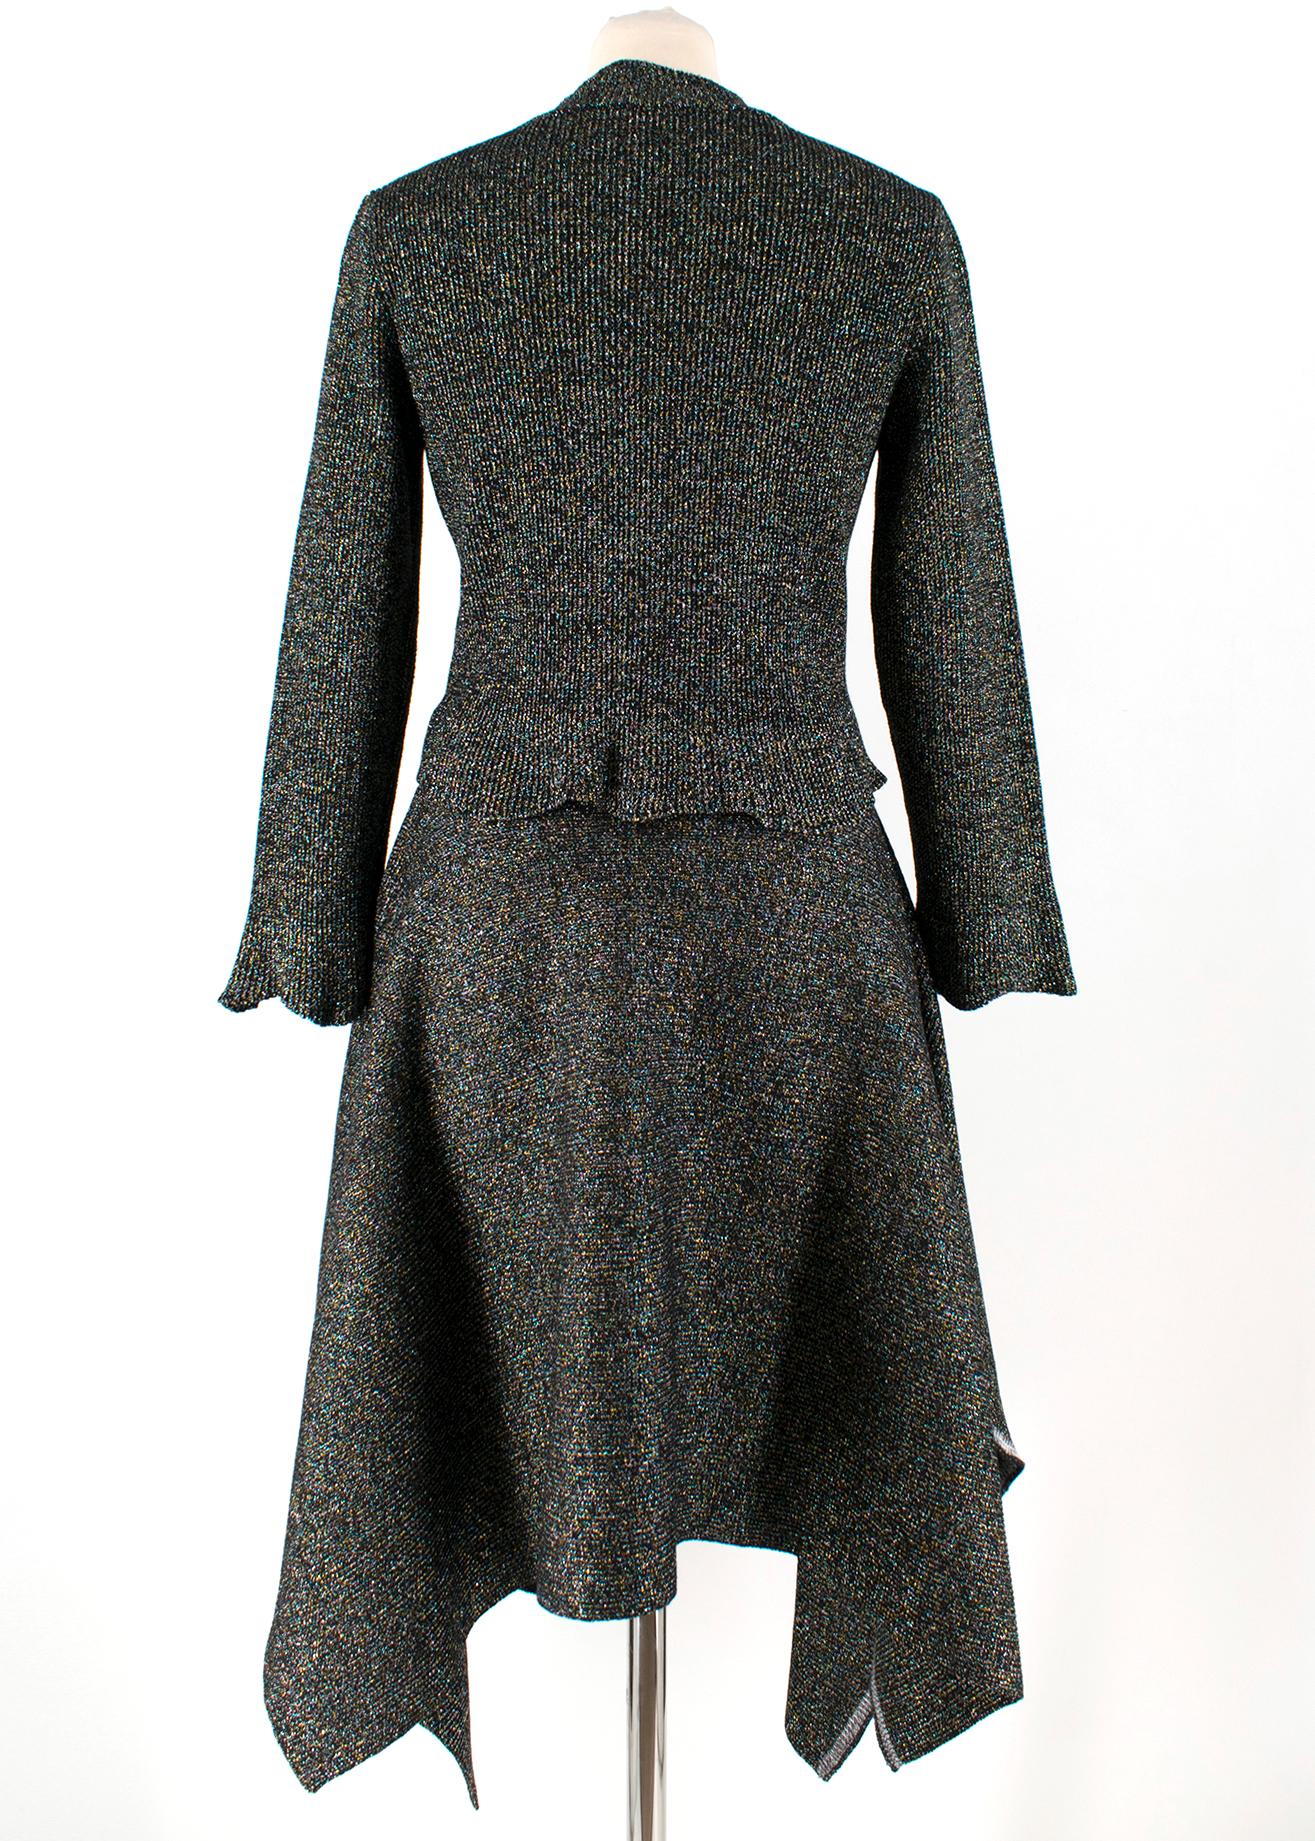 Black Balenciaga Metallic Knit Cropped Sweater and Skirt Set Size: S